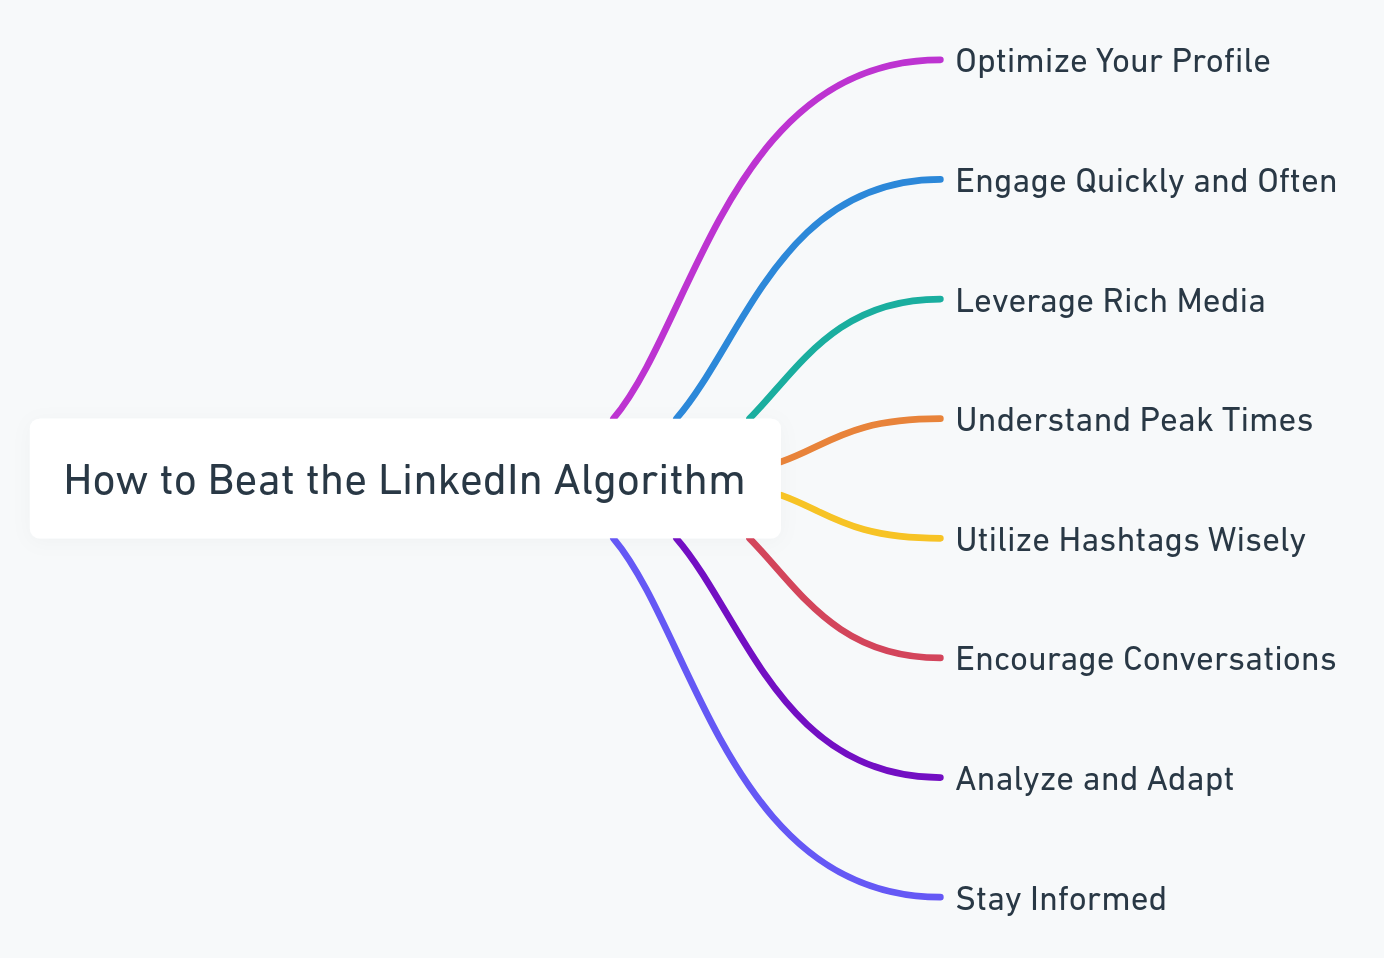 How to beat the LinkedIn Algorithm